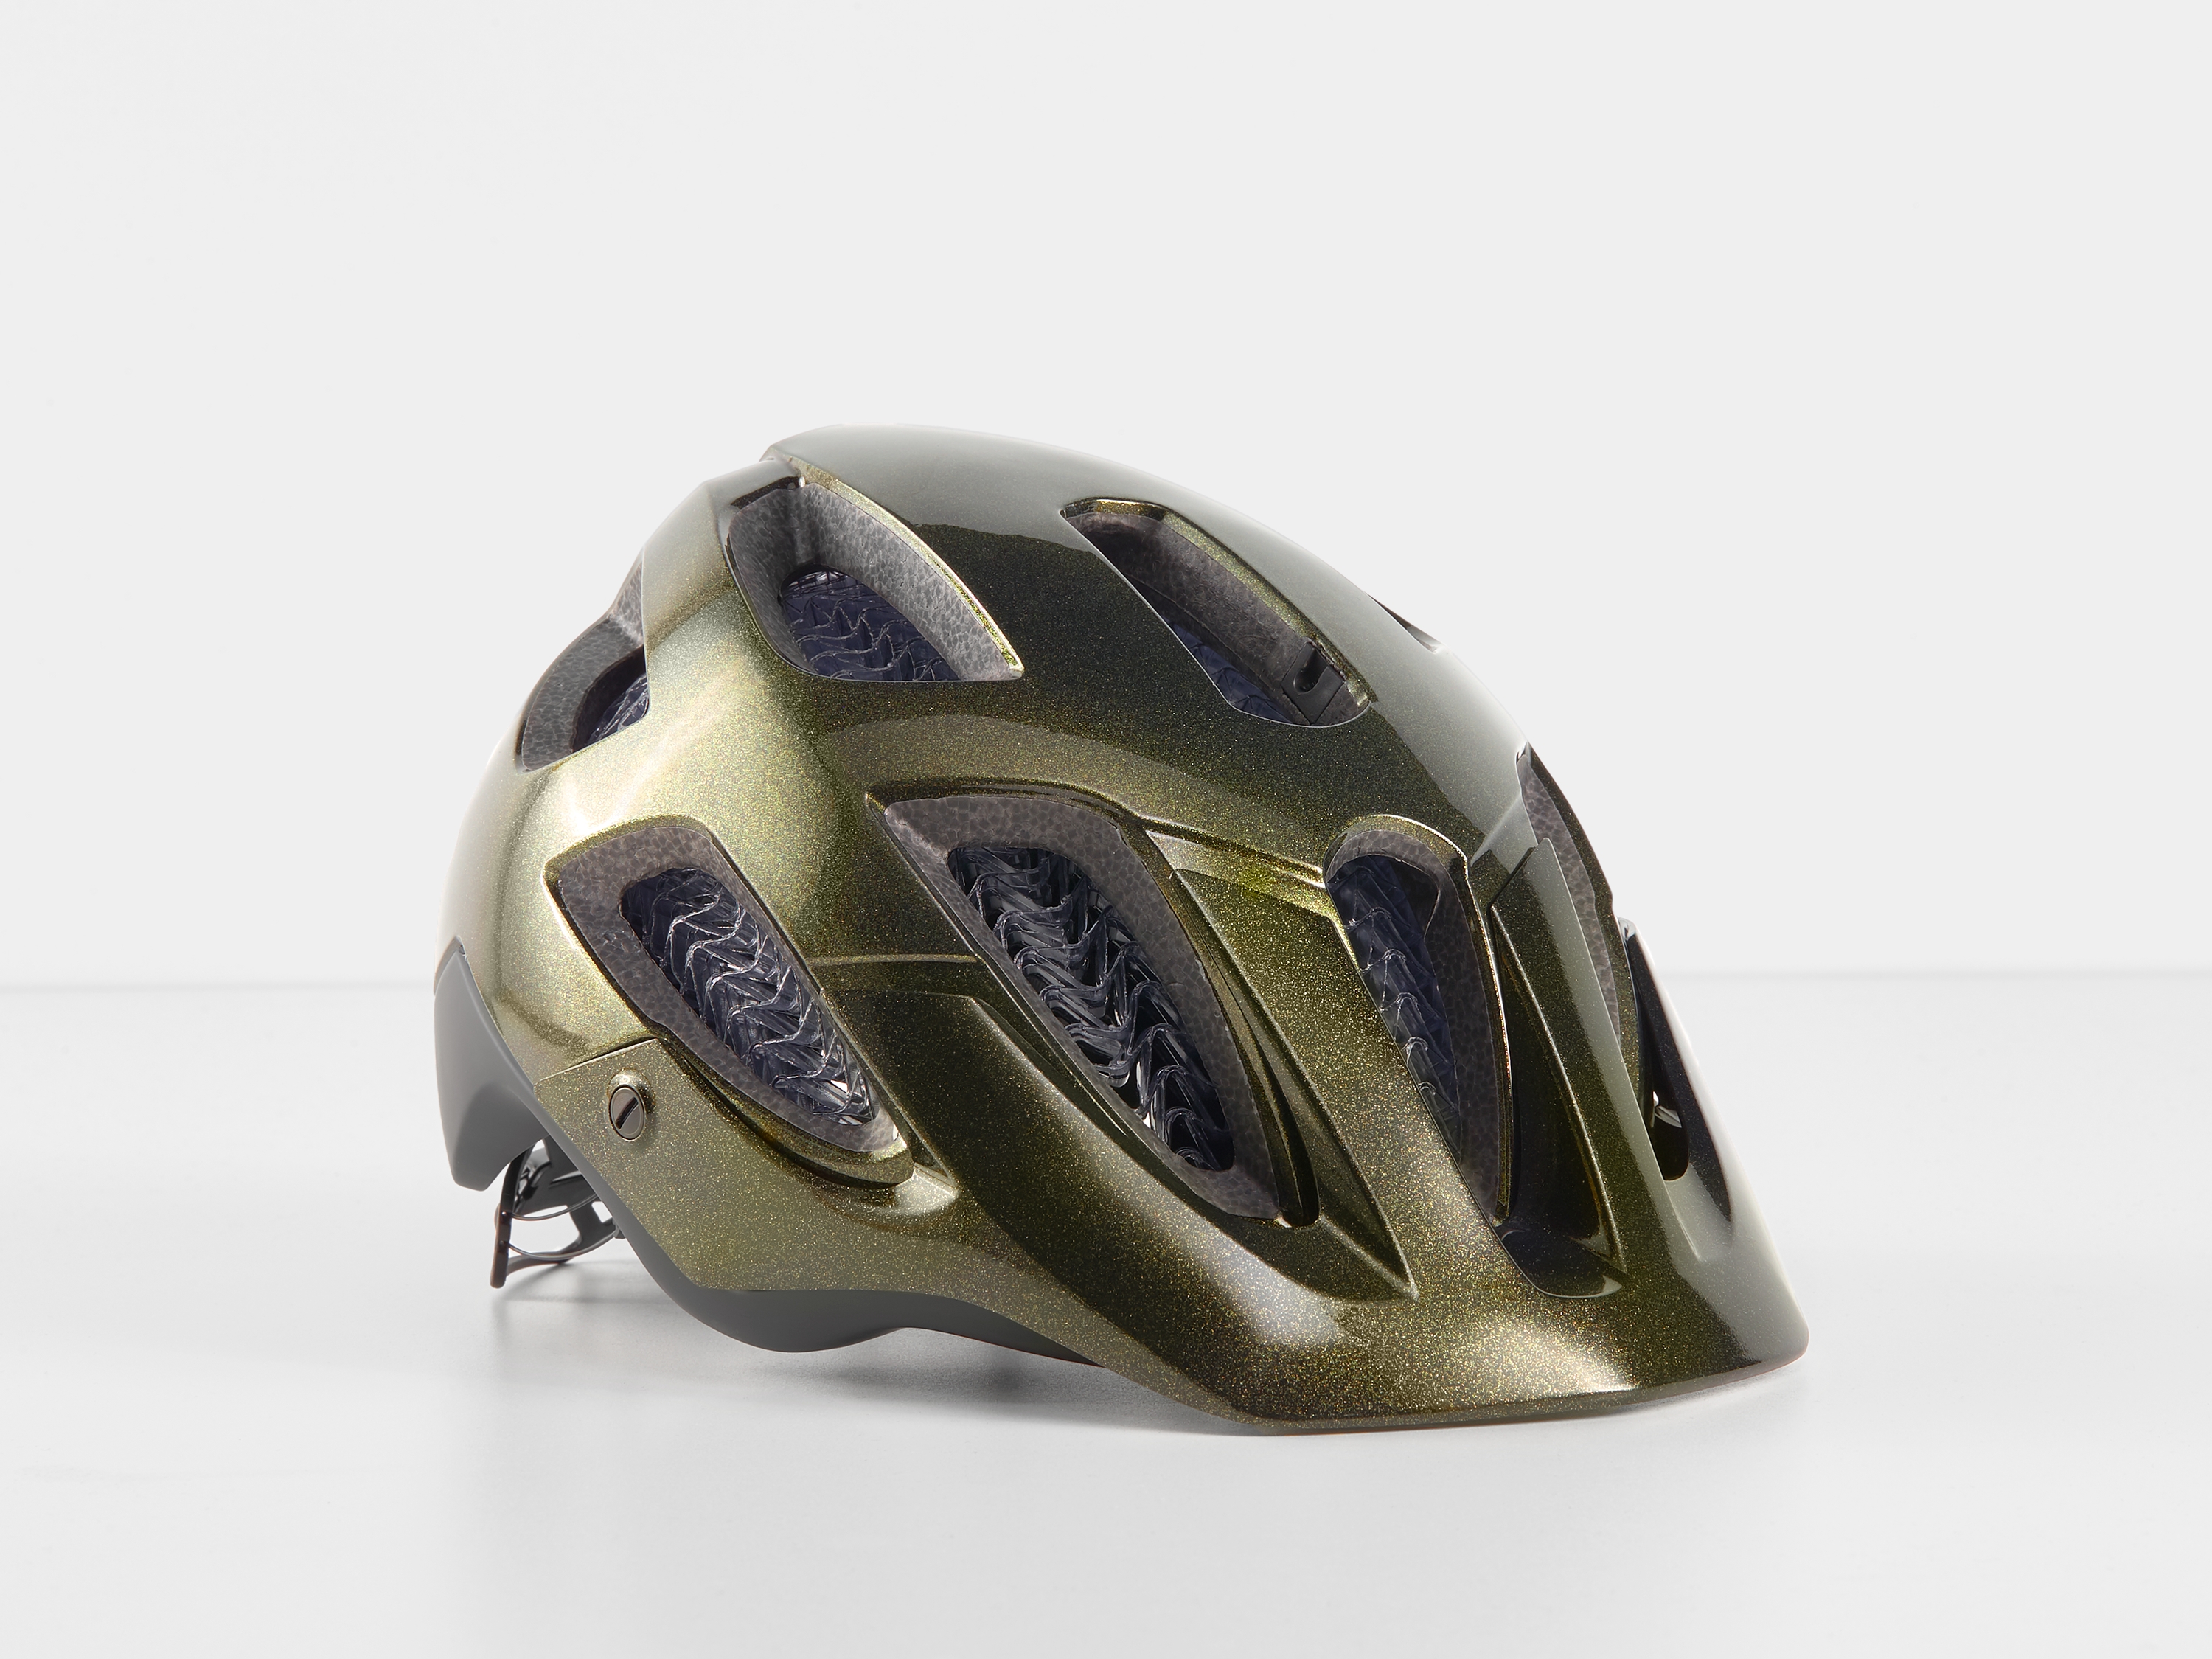 bontrager mountain bike helmet